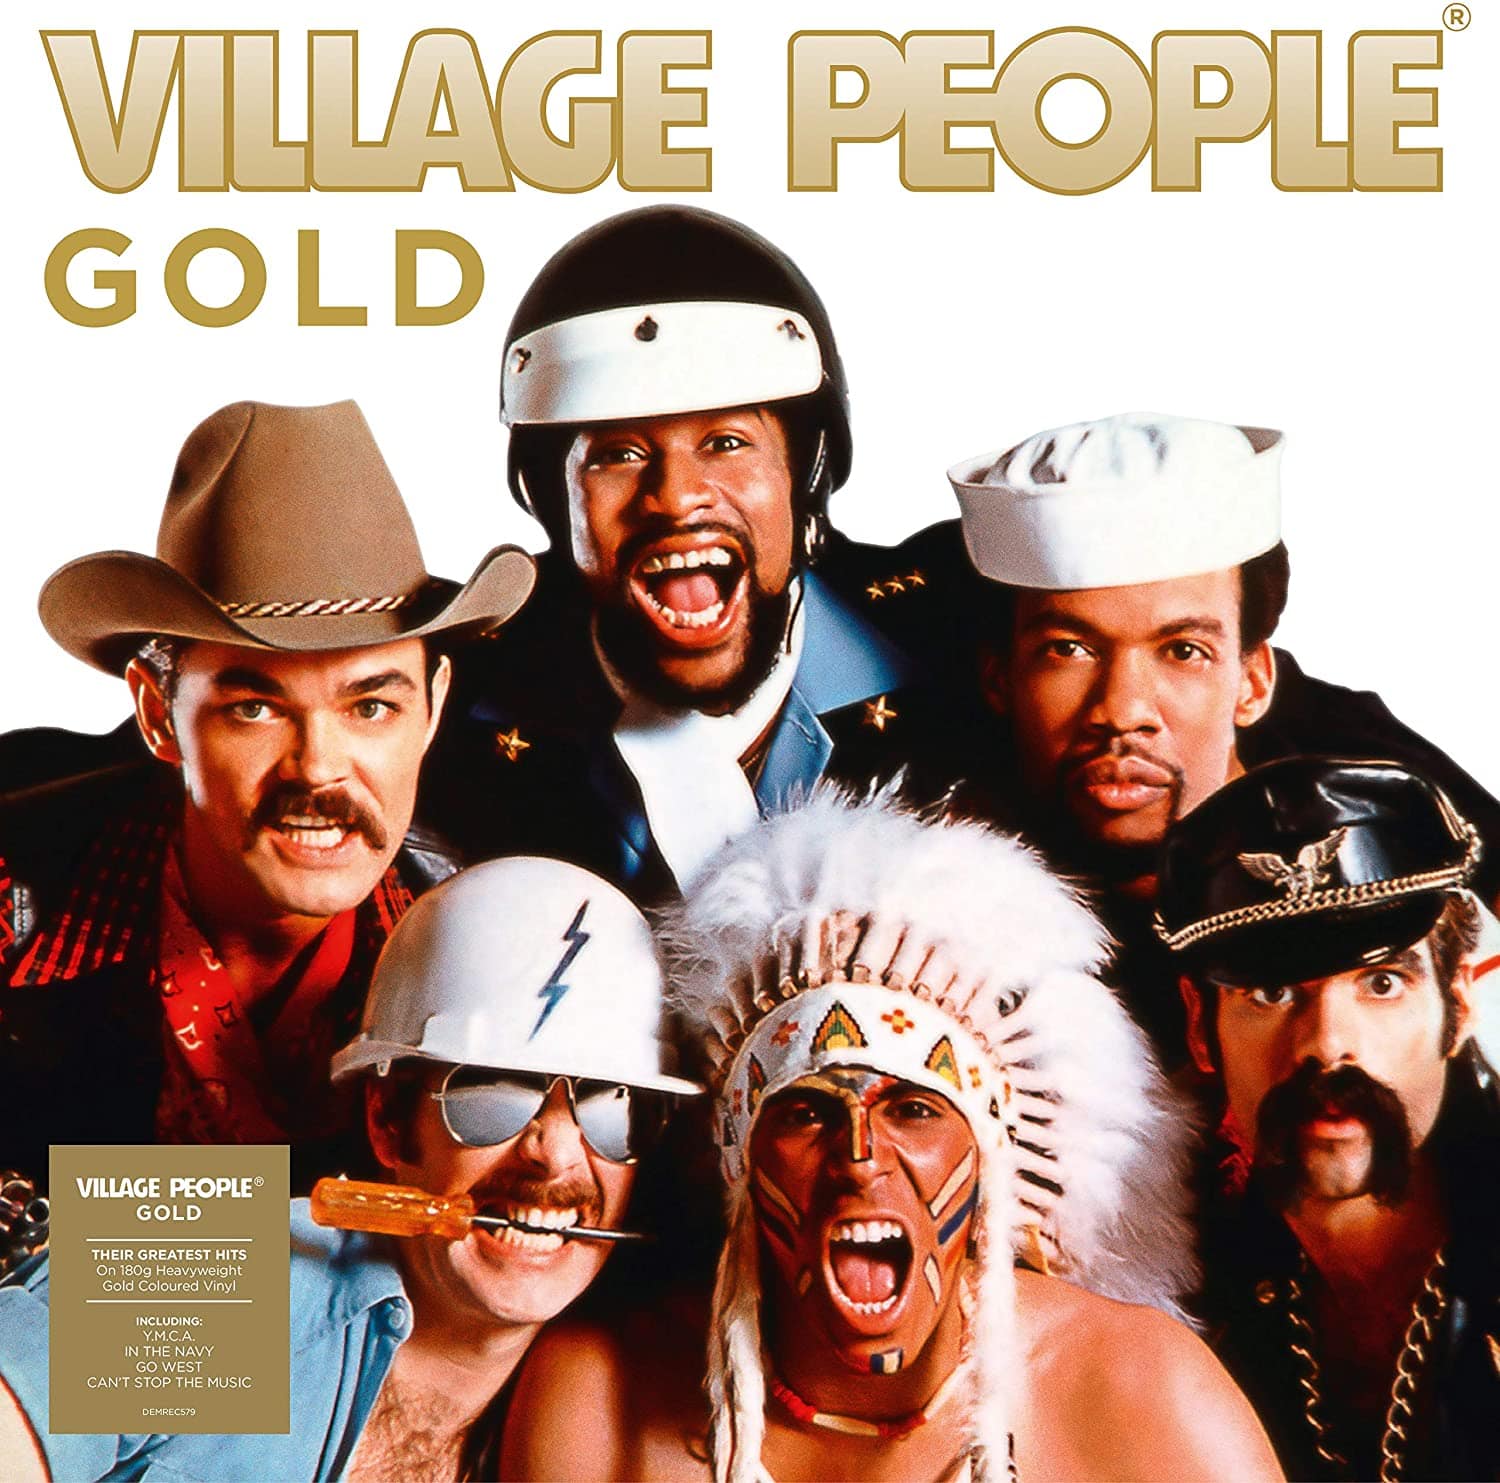 GOLD - VILLAGE PEOPLE [Vinyl]